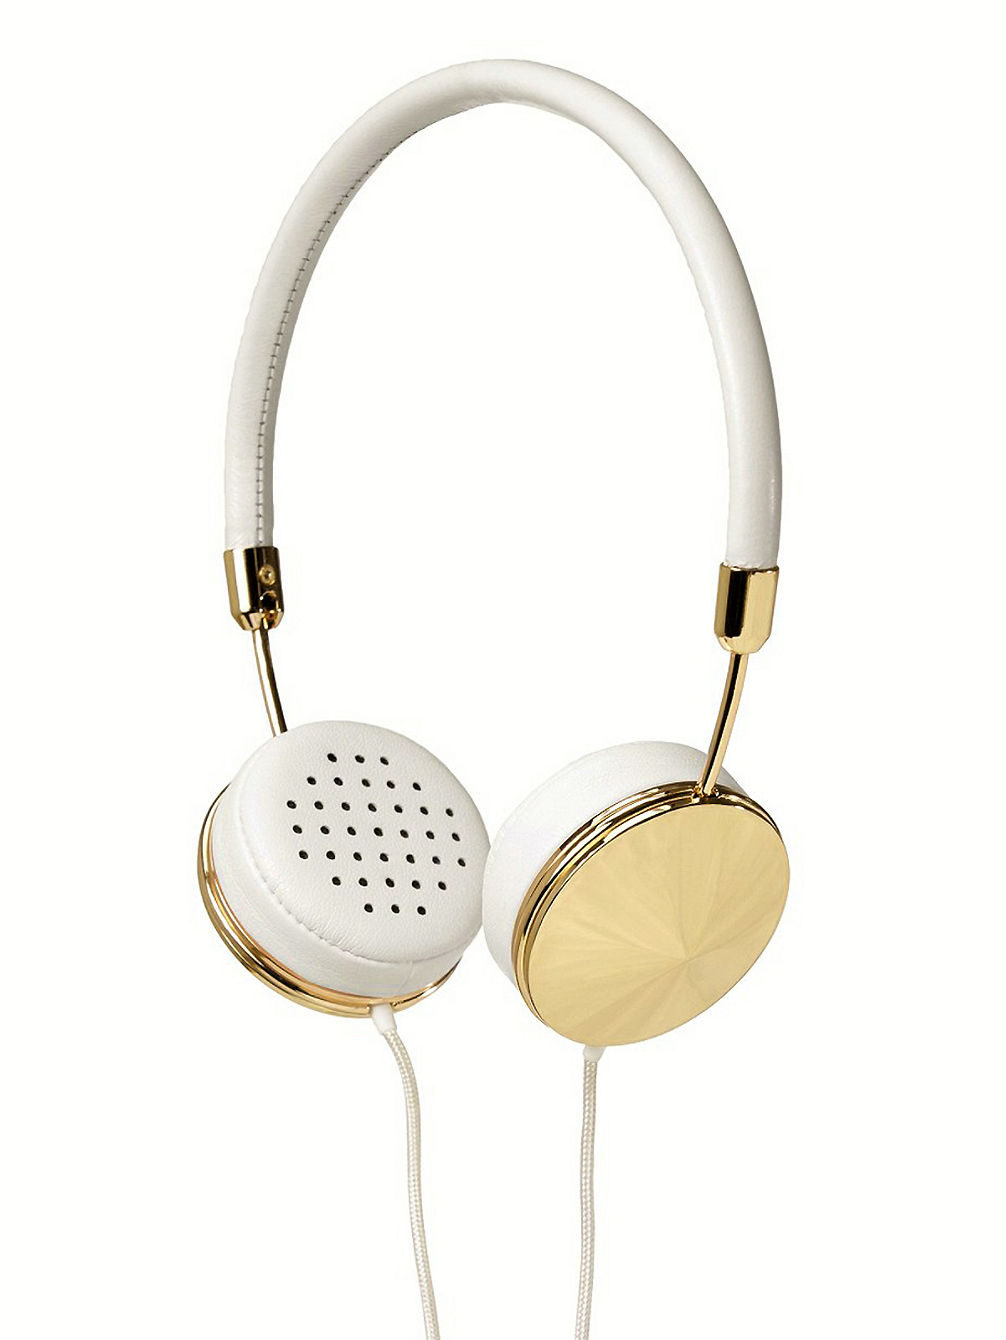 The Layla White LeatherGold Headphones